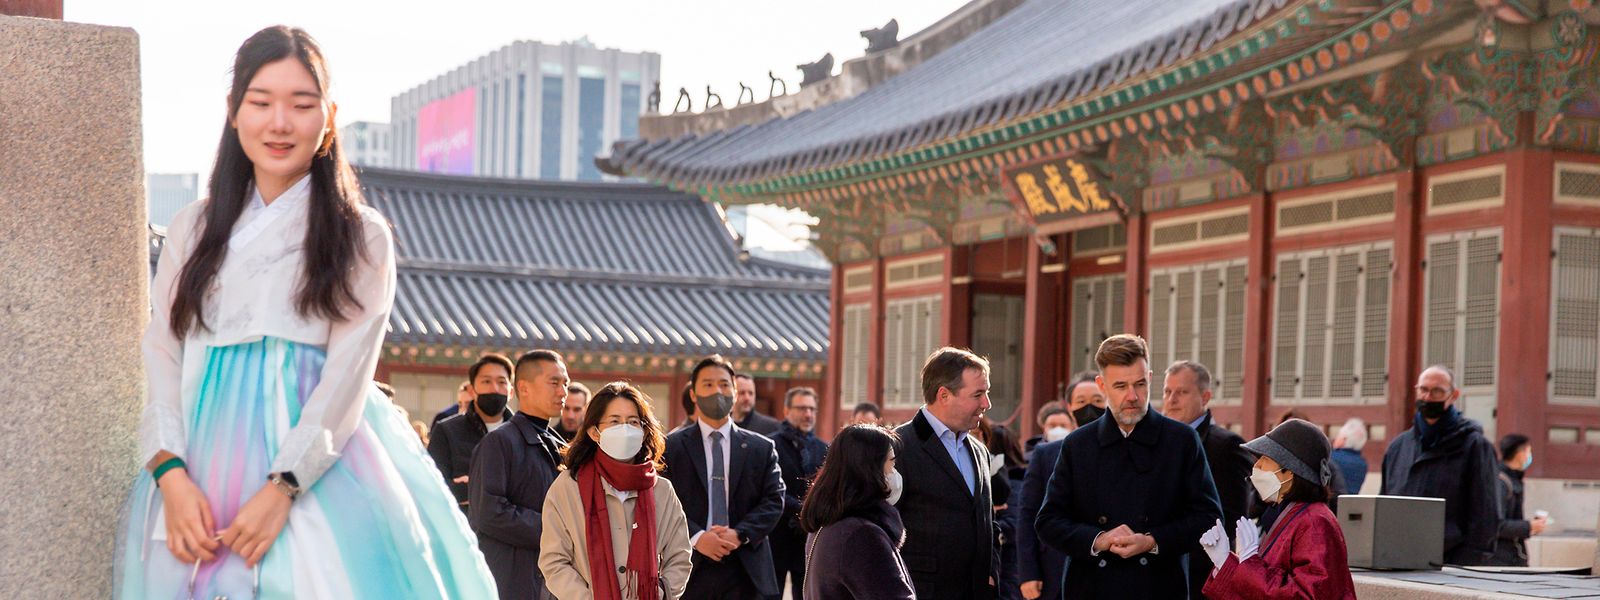 Delegação luxemburguesa visita Palácio Real de Gyeongbokgung em Seul.